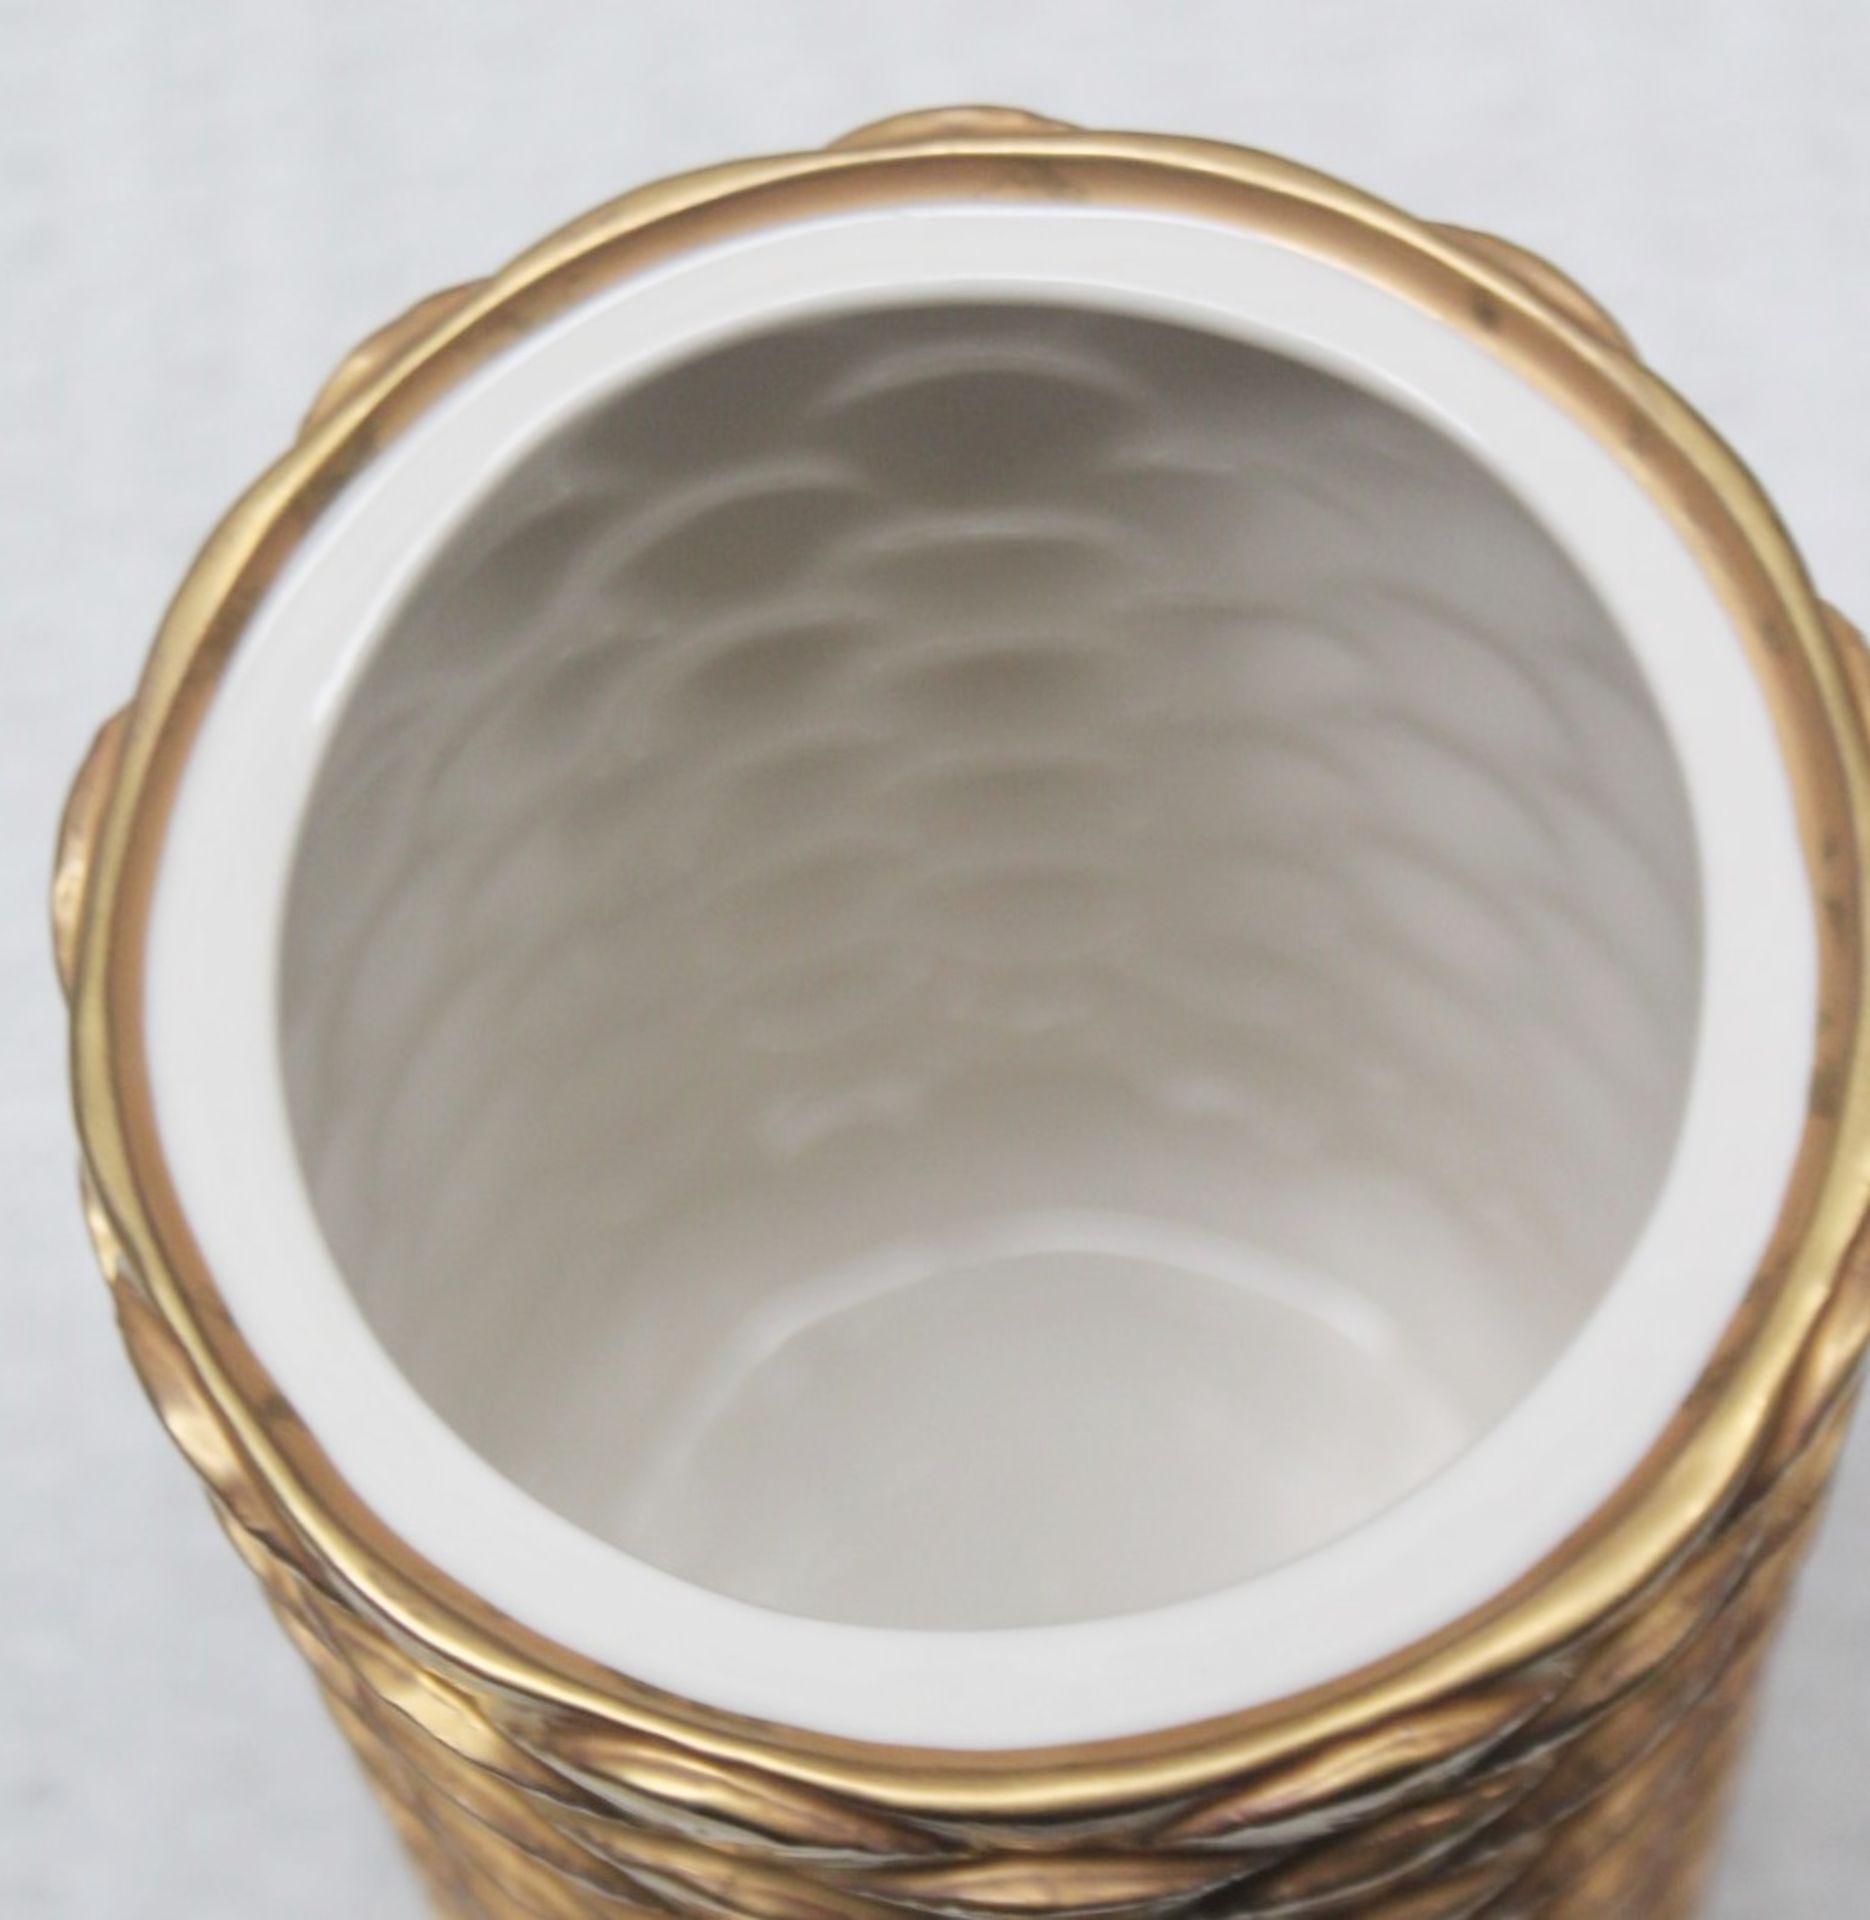 1 x VILLARI 'Peacock' Opulent 24-karat Gold Decorated Porcelain Toilet Brush Holder - RRP £459.00 - Image 5 of 9